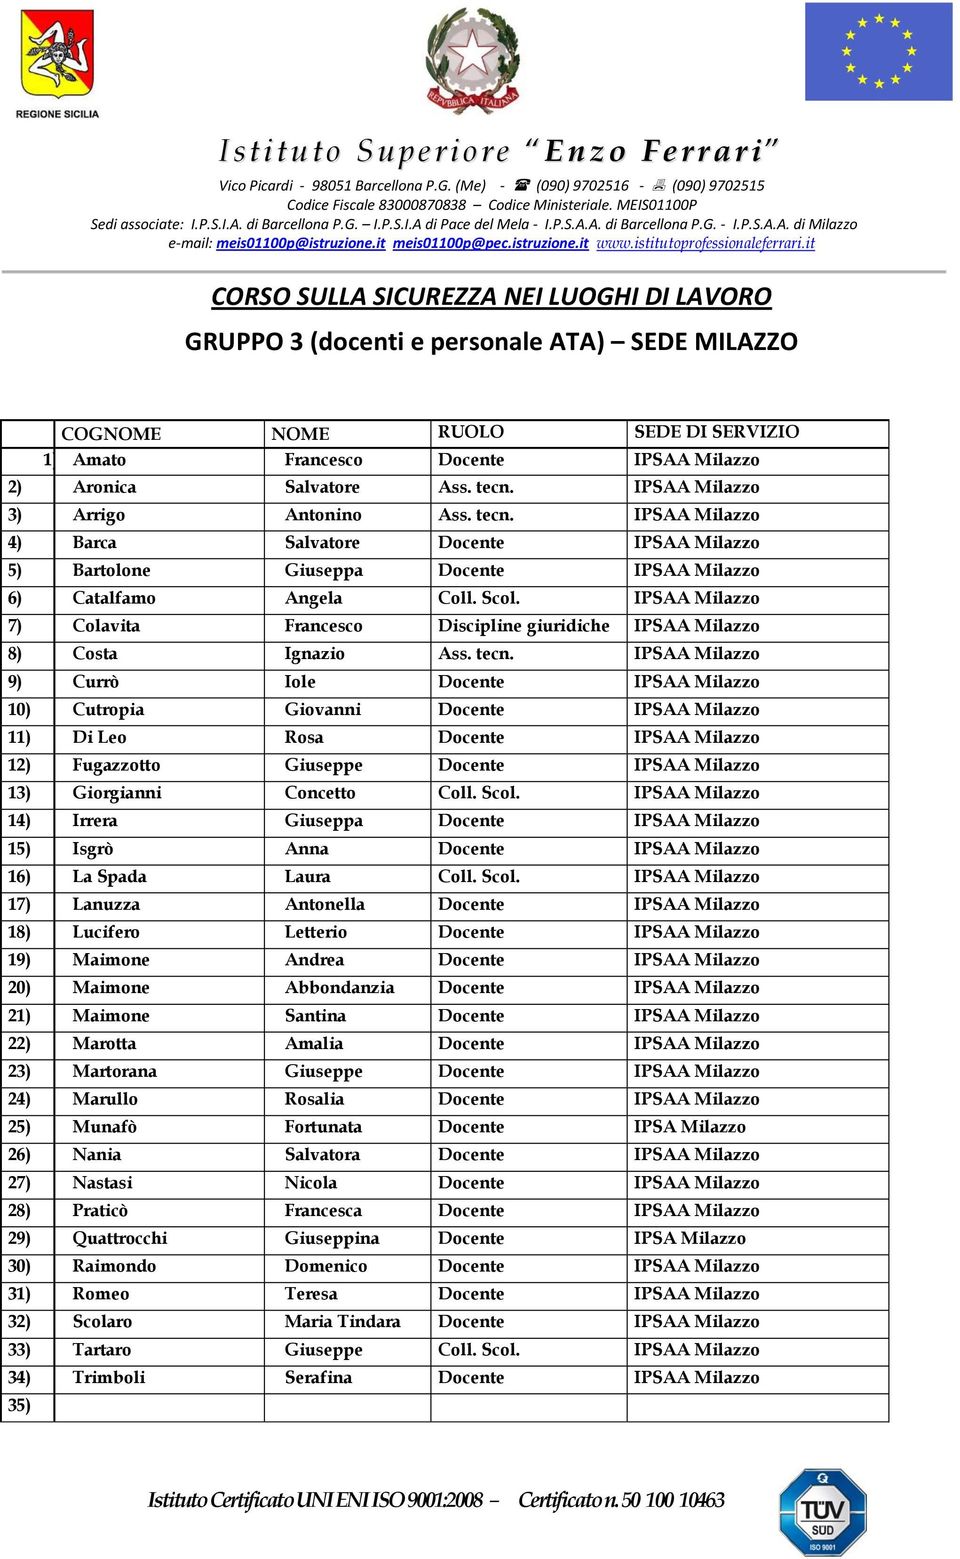 IPSAA Milazzo 7) Colavita Francesco Discipline giuridiche IPSAA Milazzo 8) Costa Ignazio Ass. tecn.